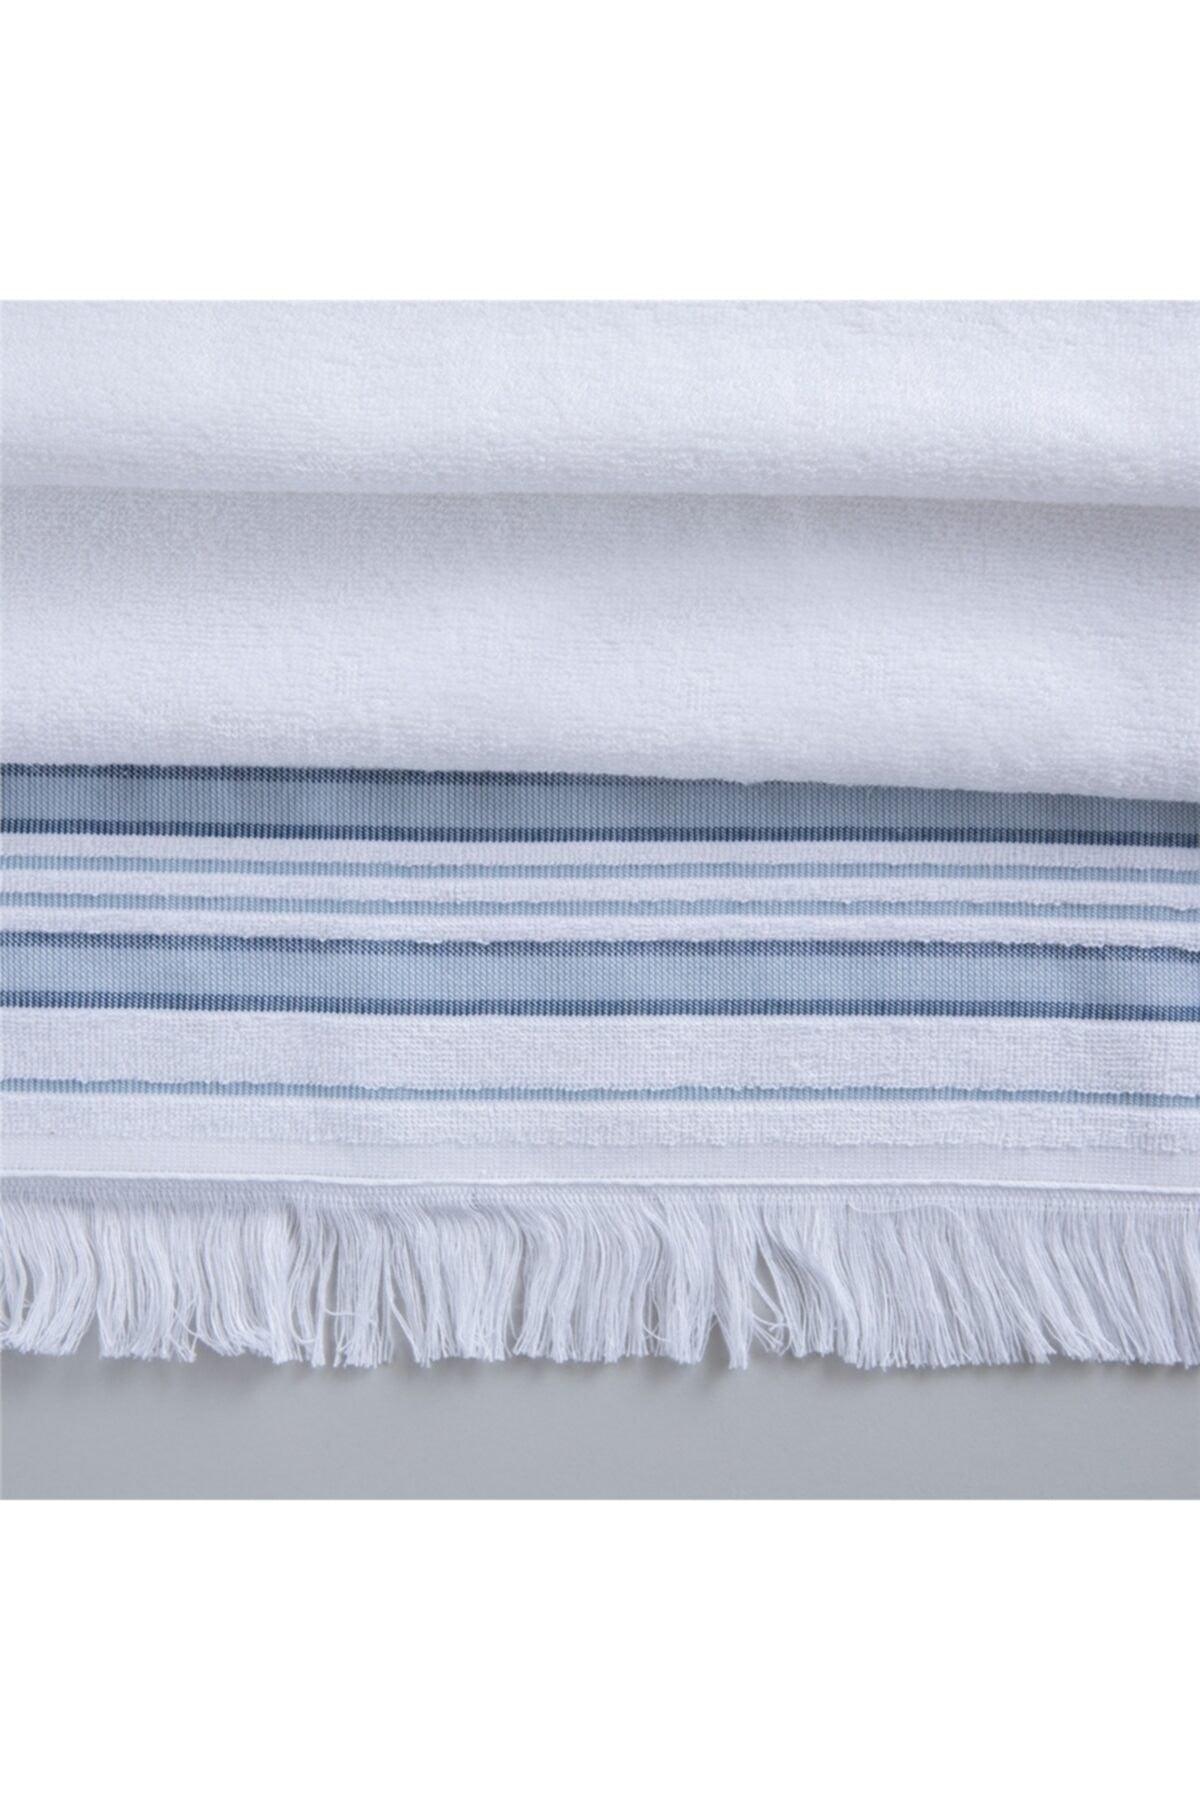 Deep Face Towel 50x90 Cm White - Swordslife